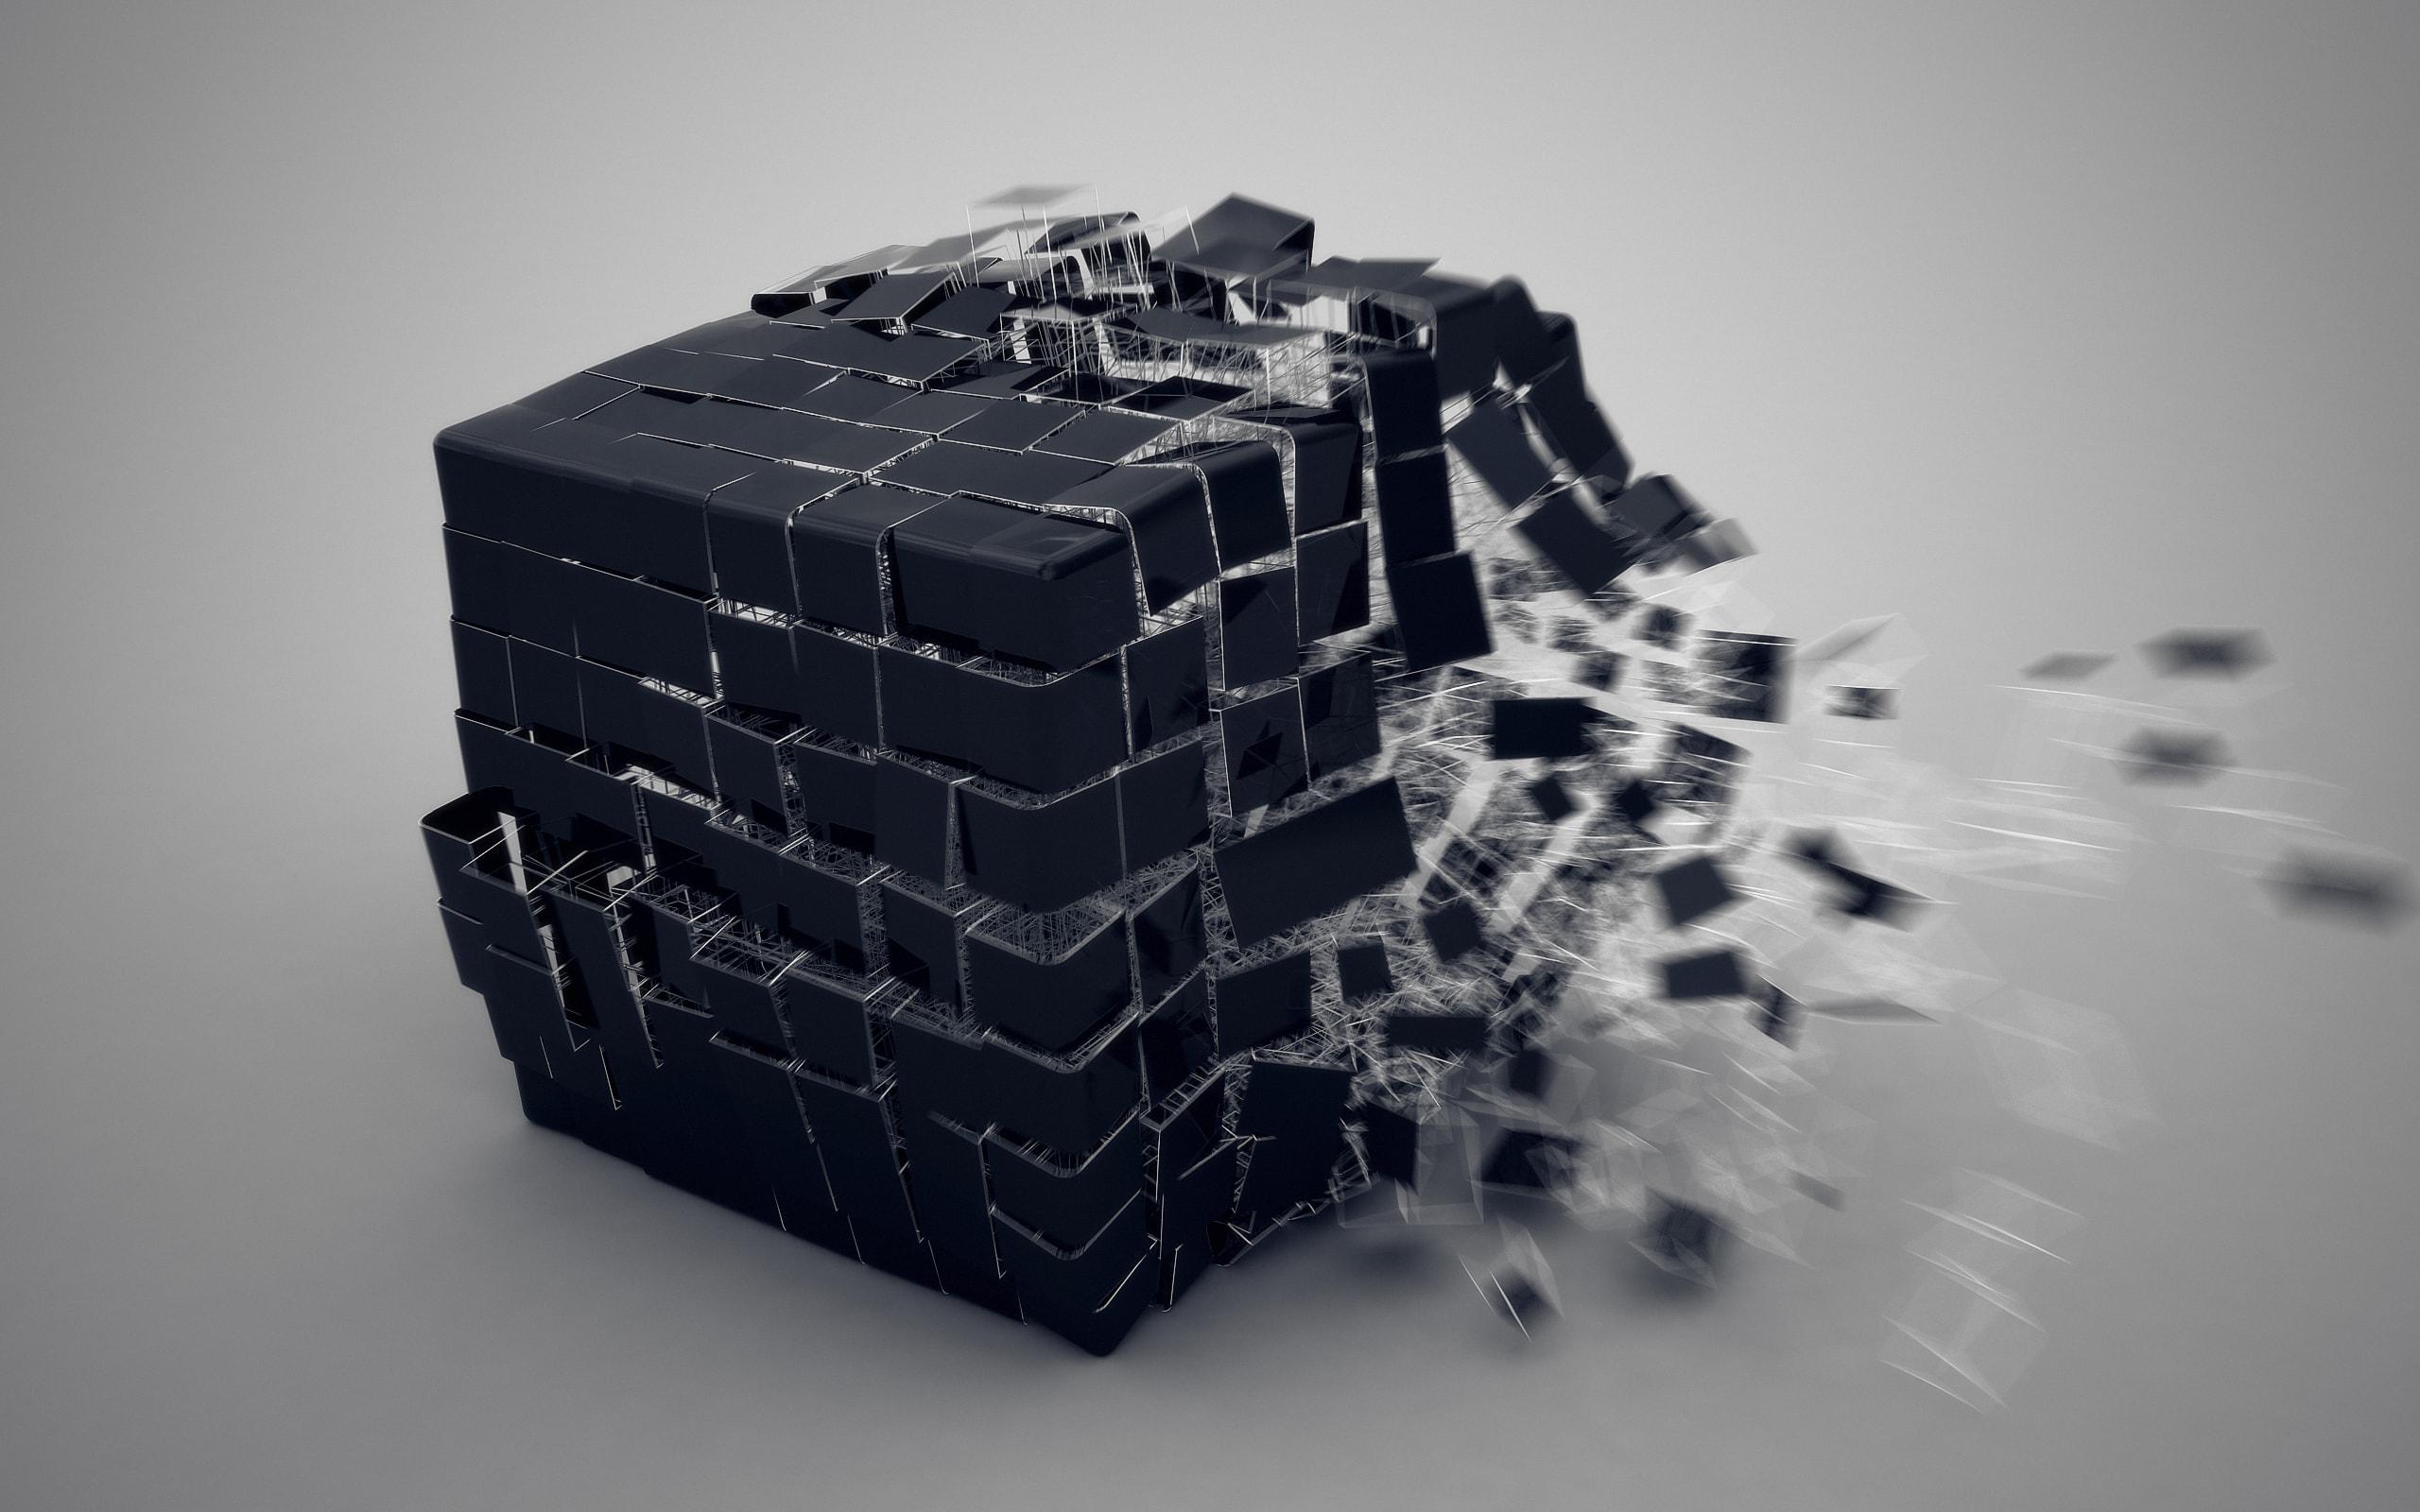 Disintegrating Cube Wallpaper and Free. Visual